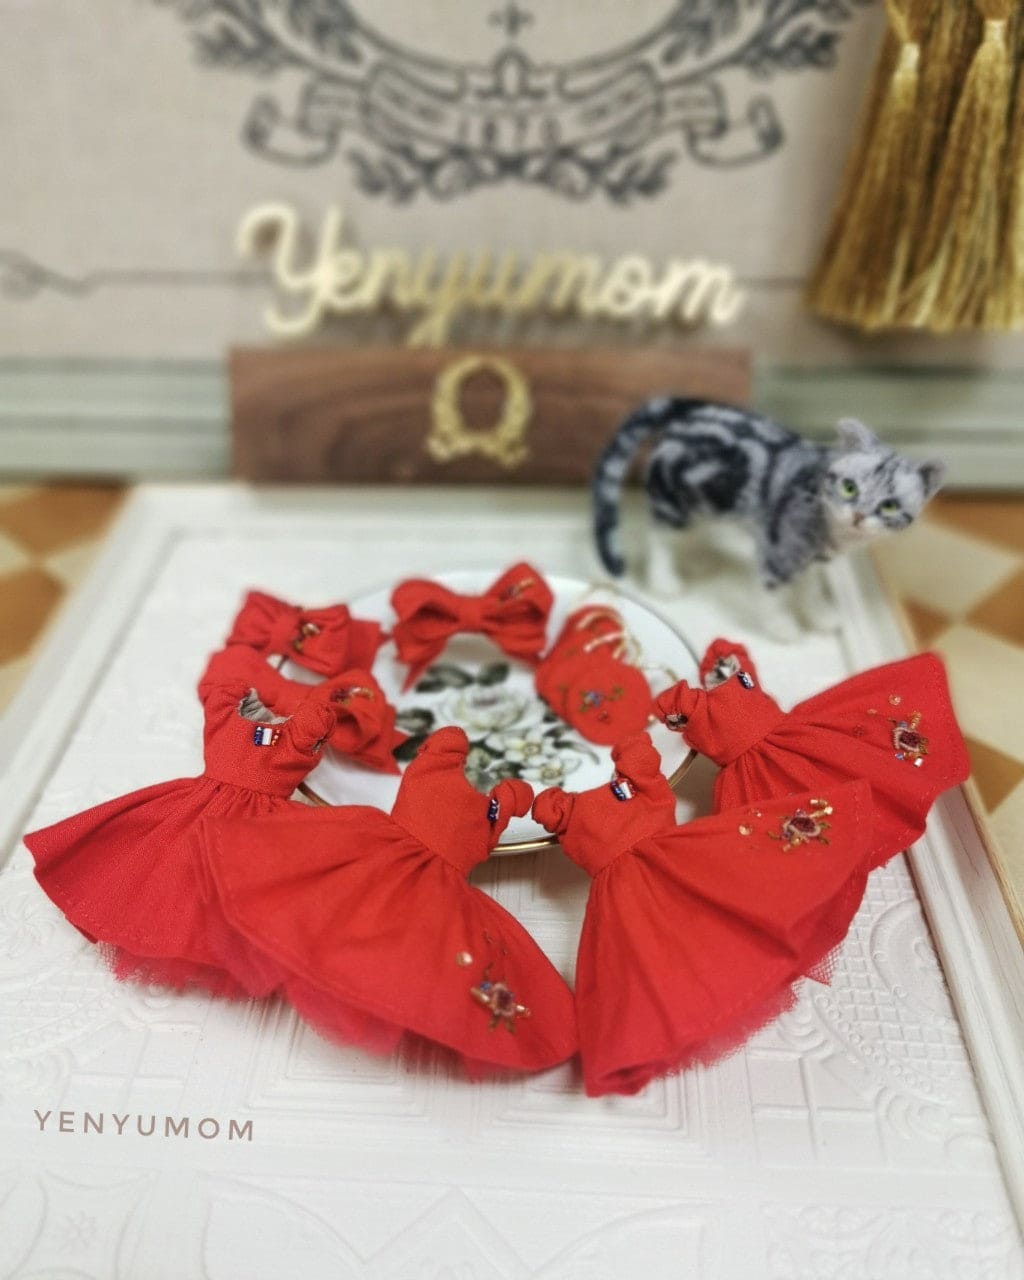 【Yenyumom】Red Embroidery Dress Set / Petite Blythe